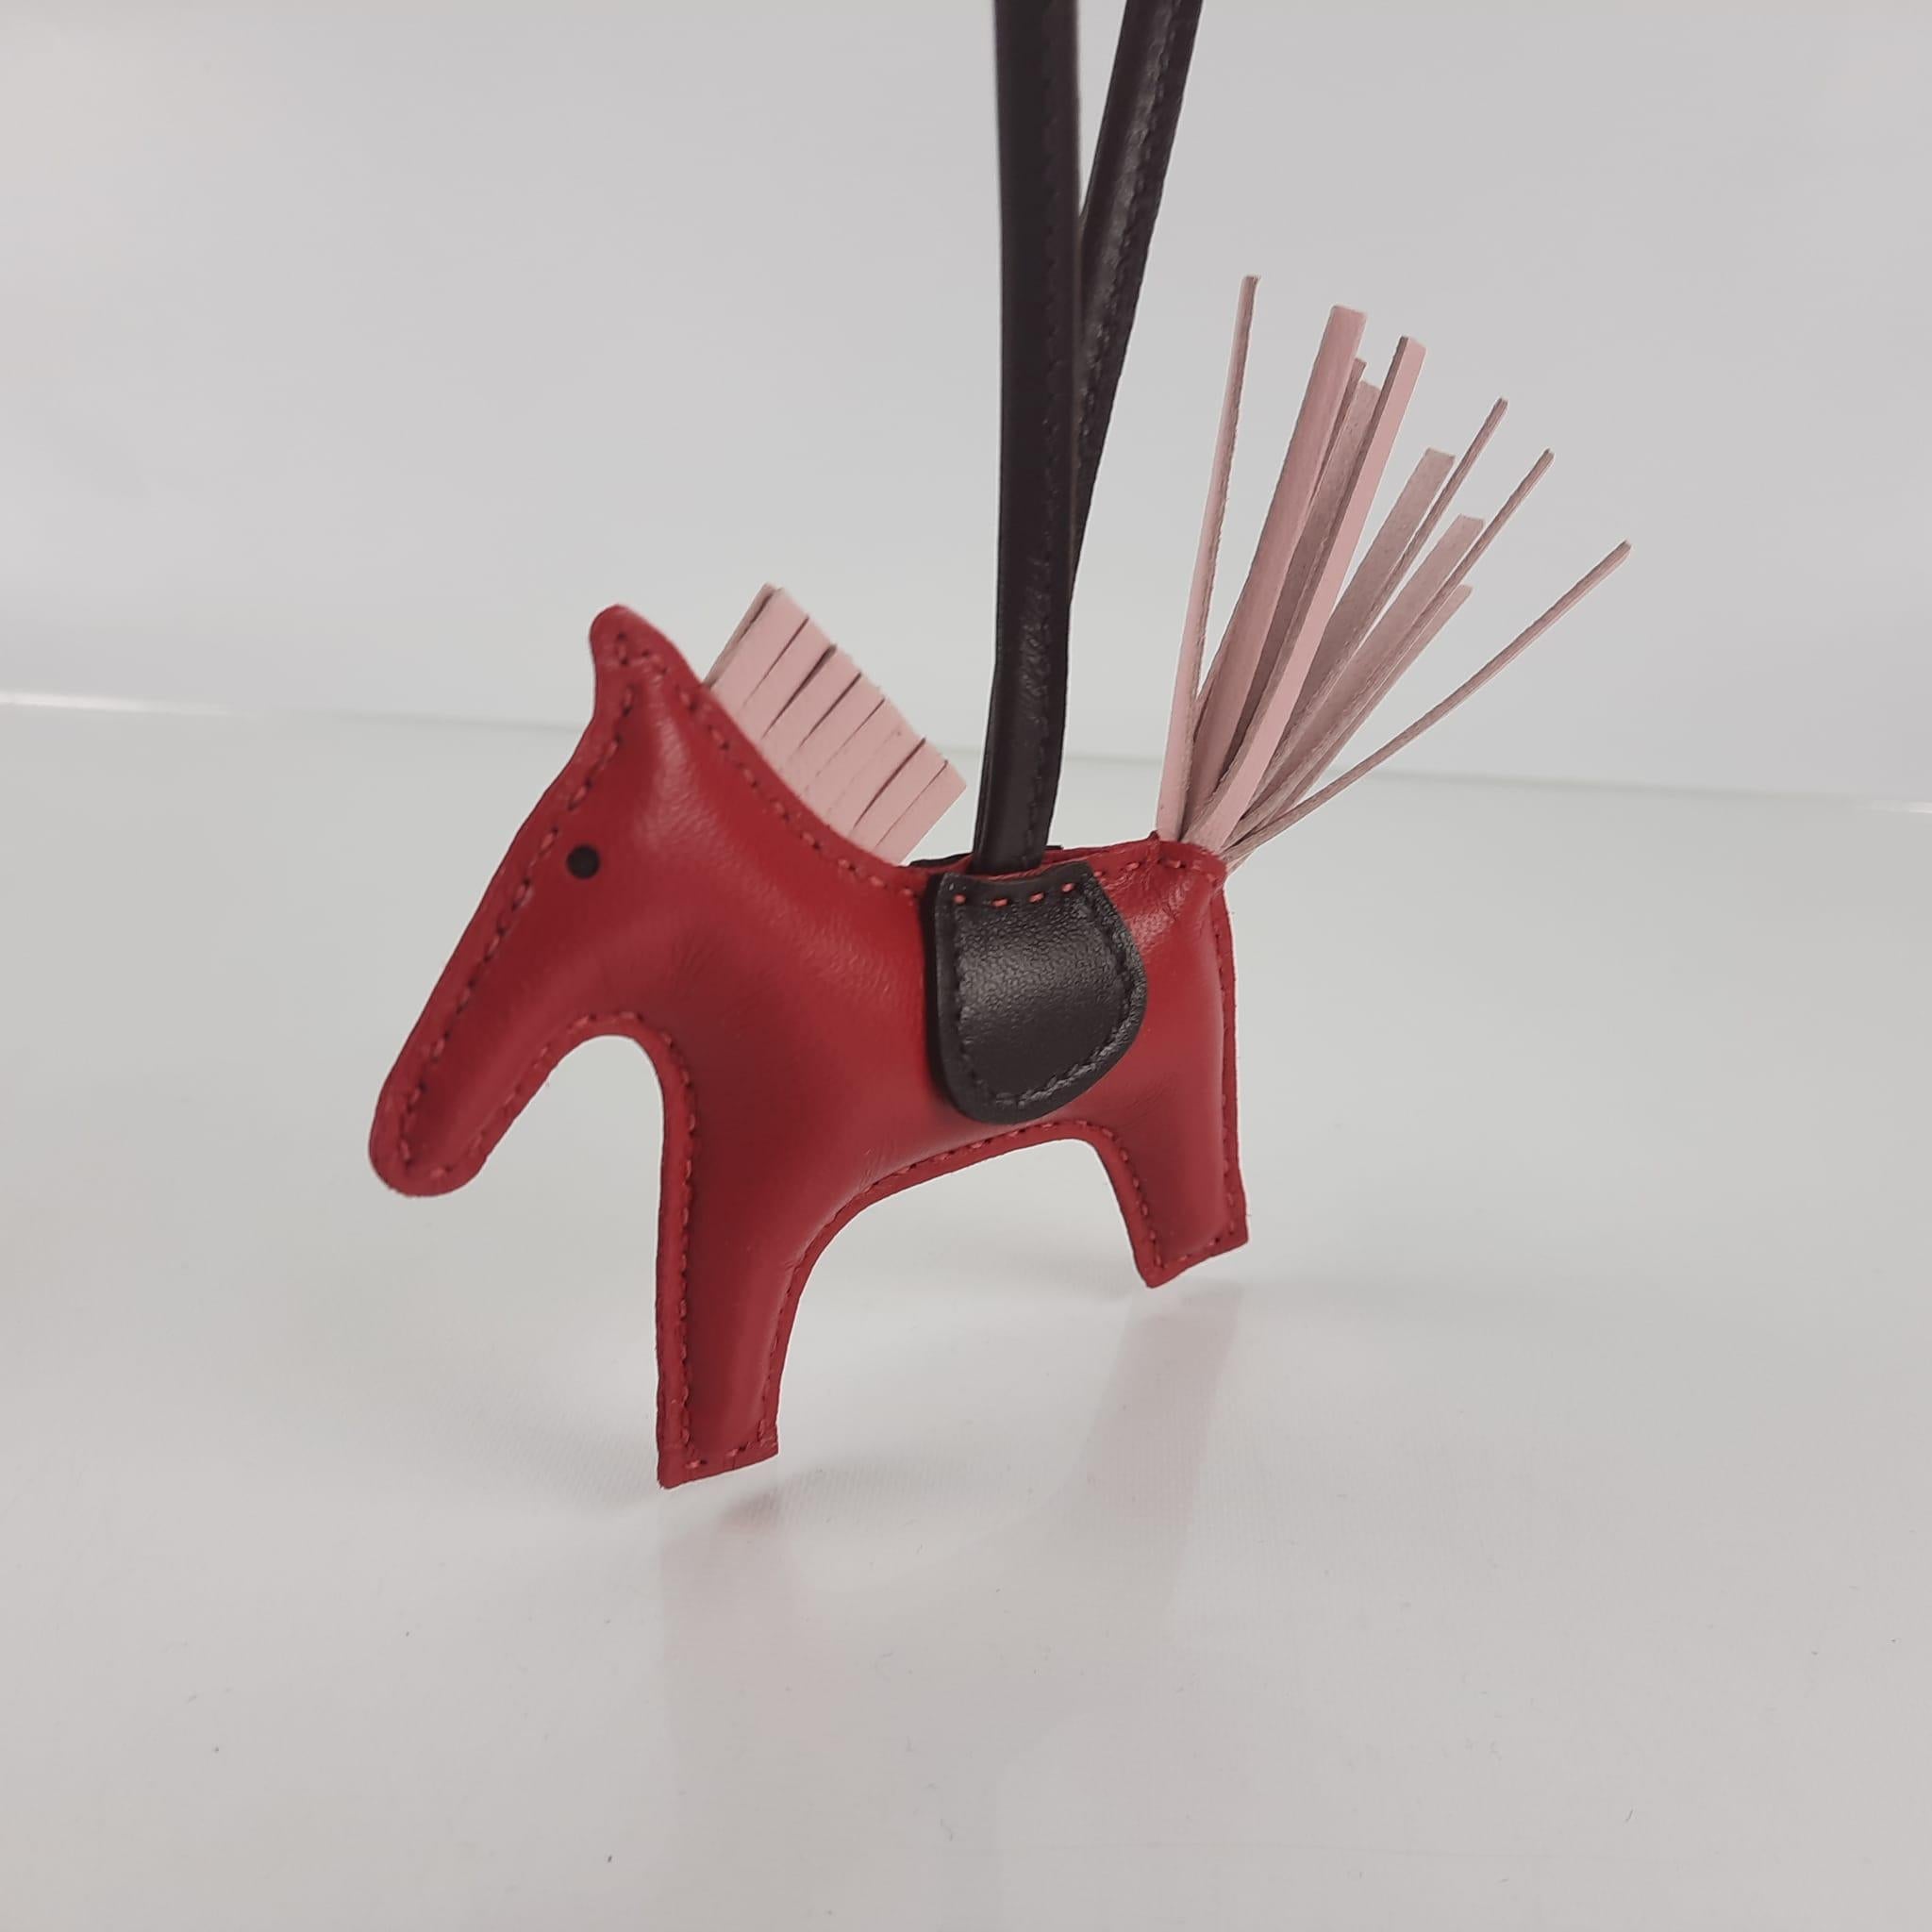 Horse charm in Milo lambskin
Dimensions: L 9.7 x H 7.8 x D 1 cm